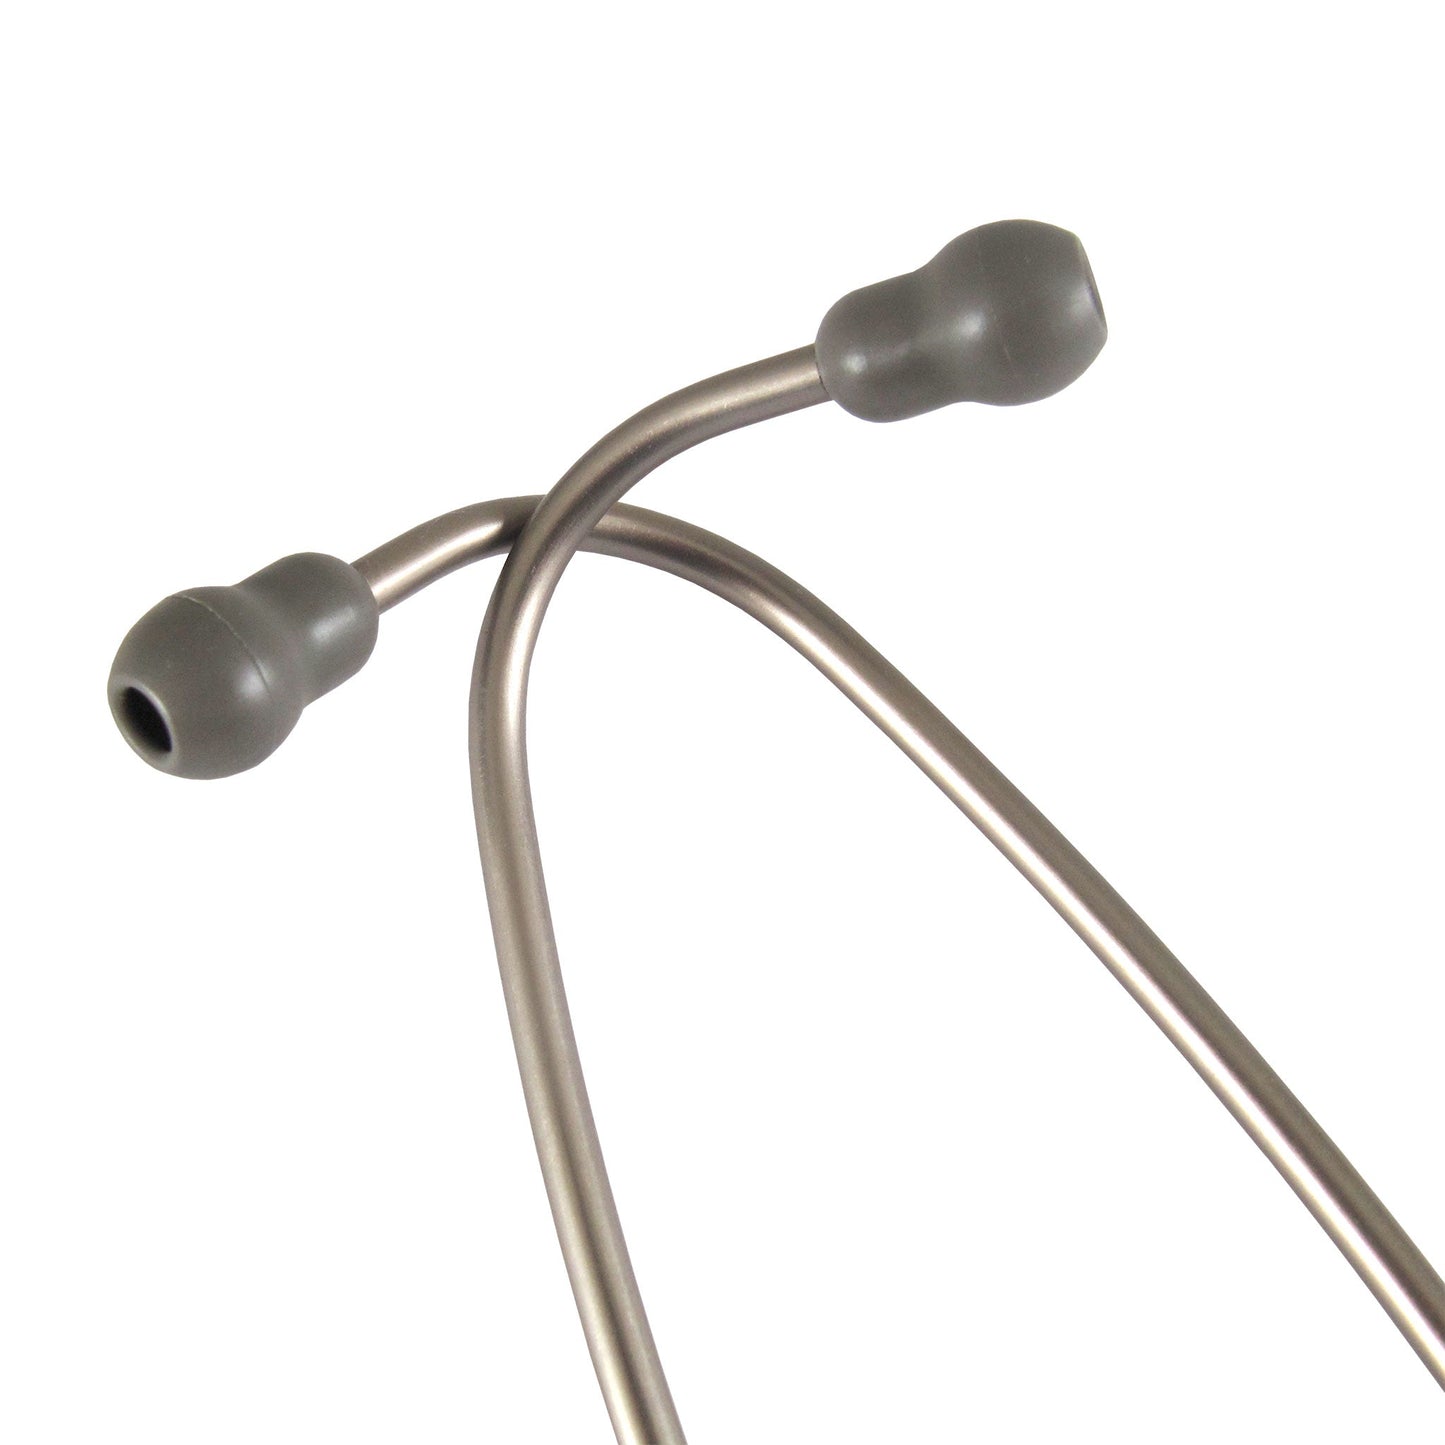 3M™ Littmann® Lightweight II S.E. Stetoskopi, bordo rdeča cev, 71 cm, 2451